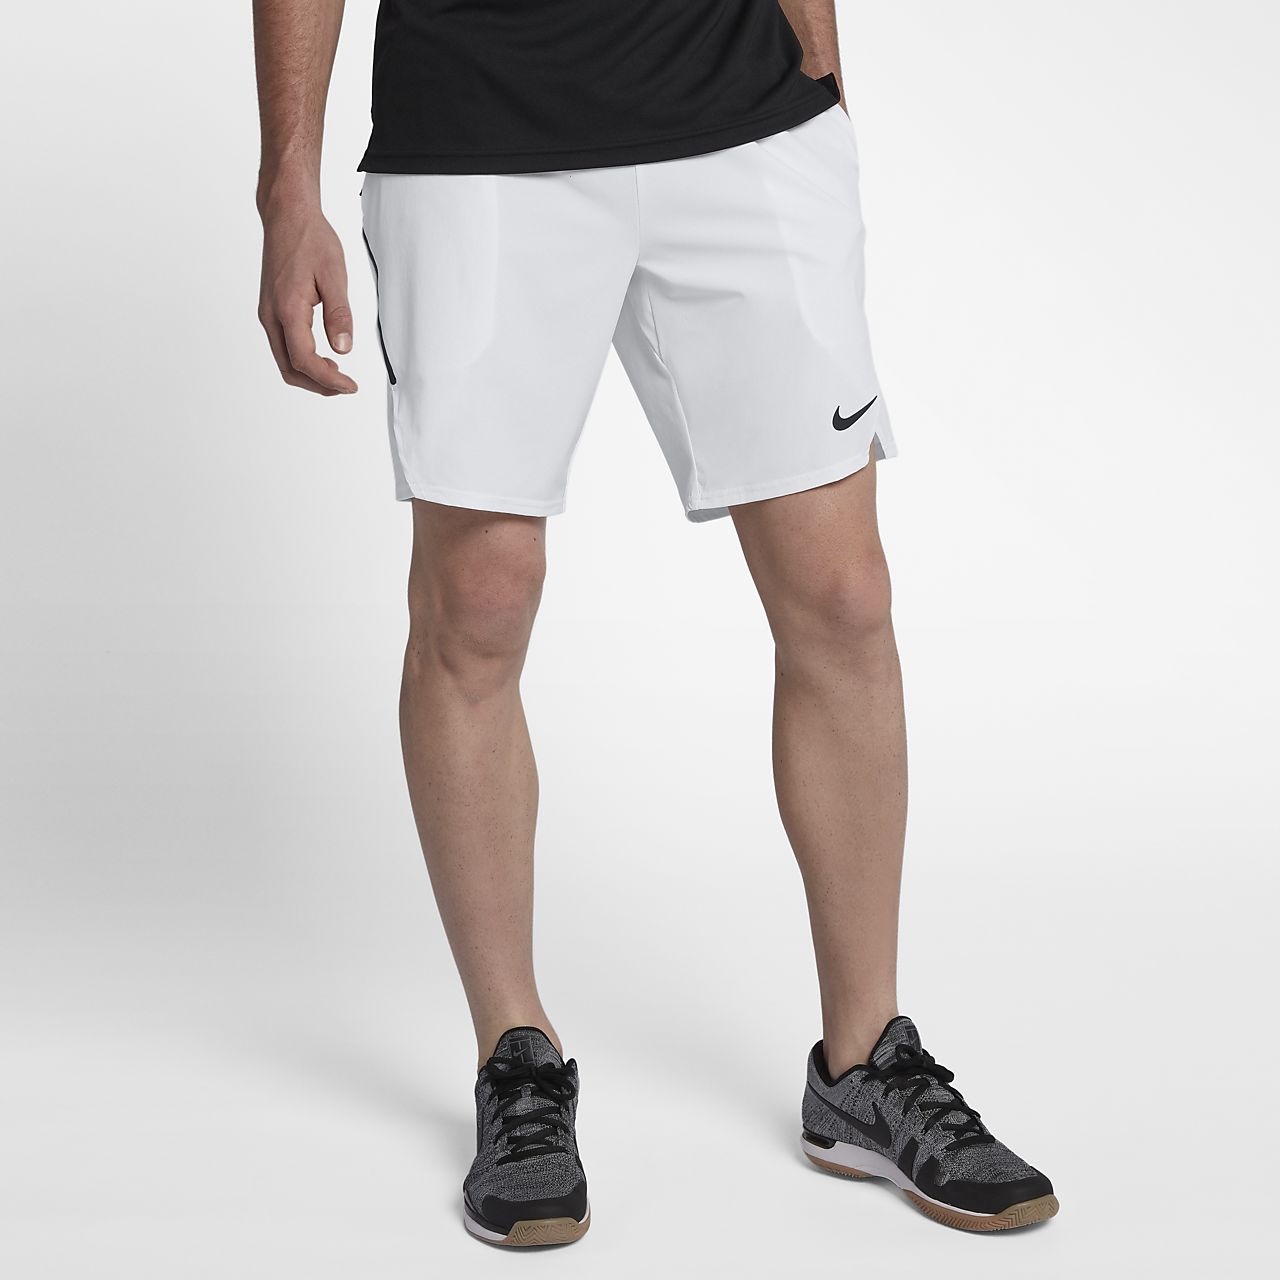 nikecourt flex shorts